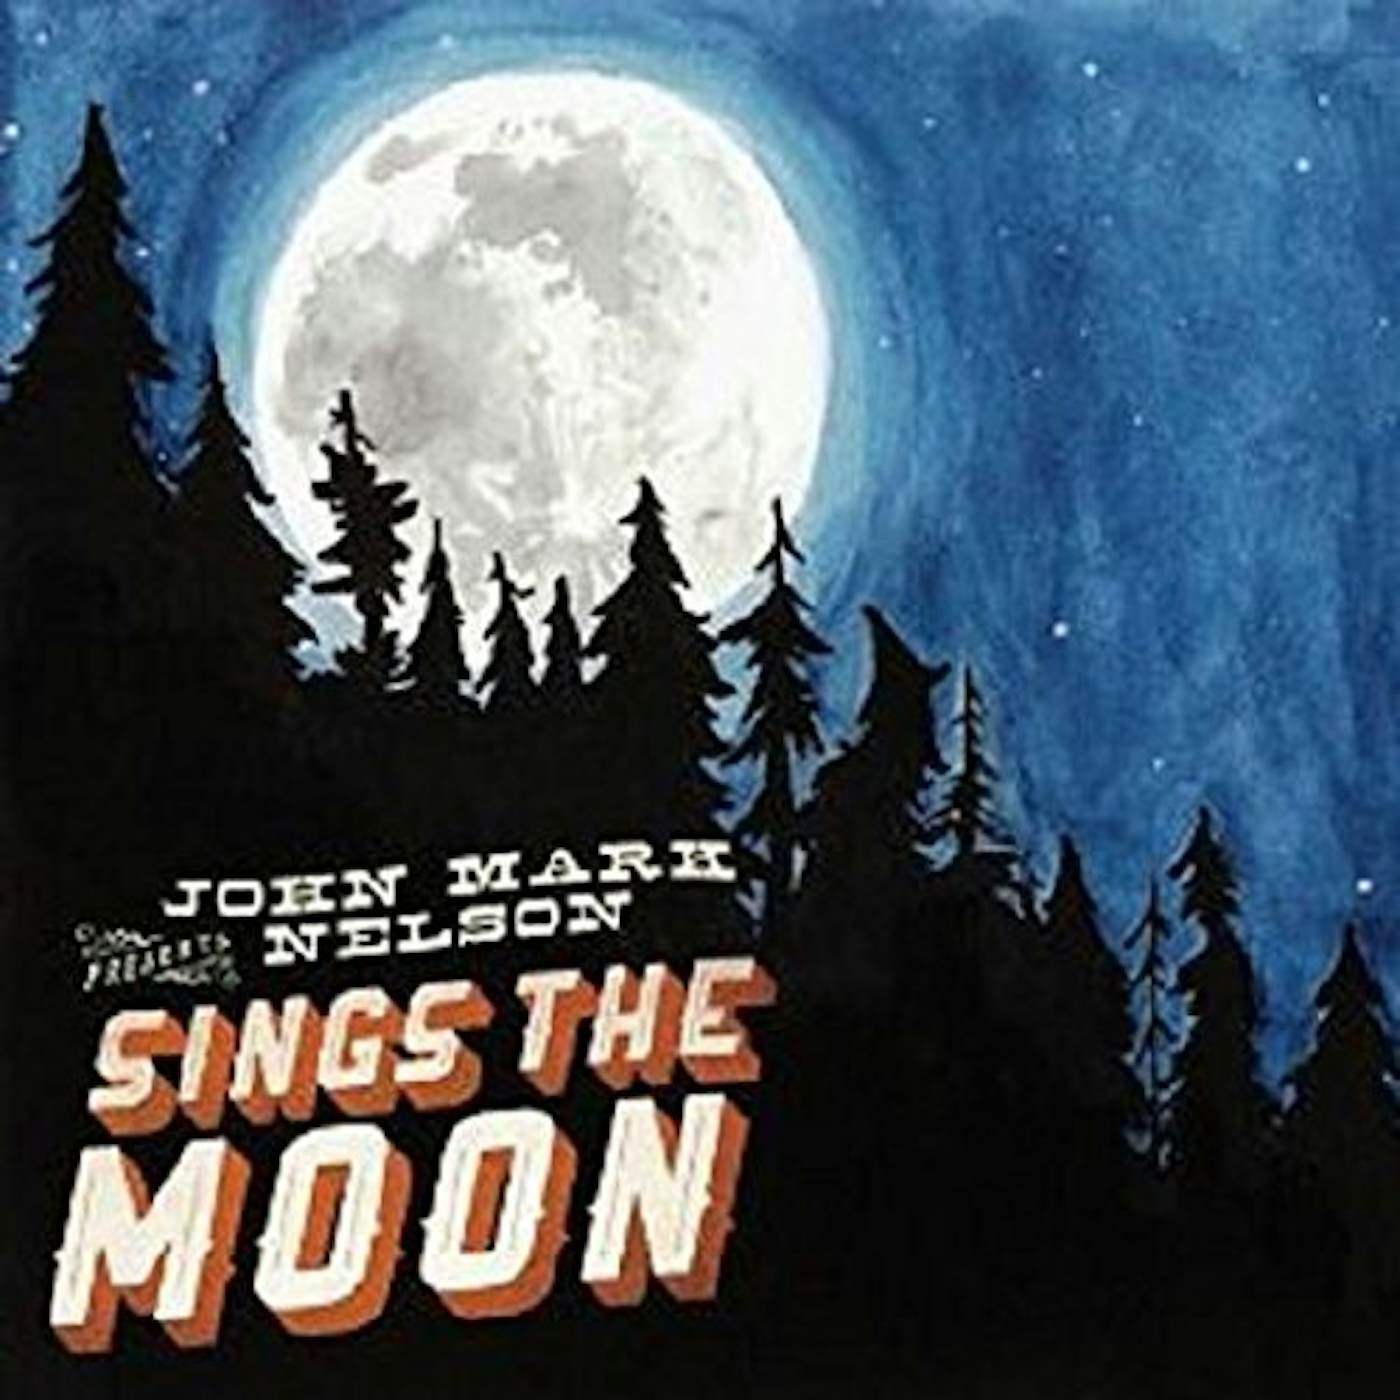 John Mark Nelson Sings the Moon Vinyl Record